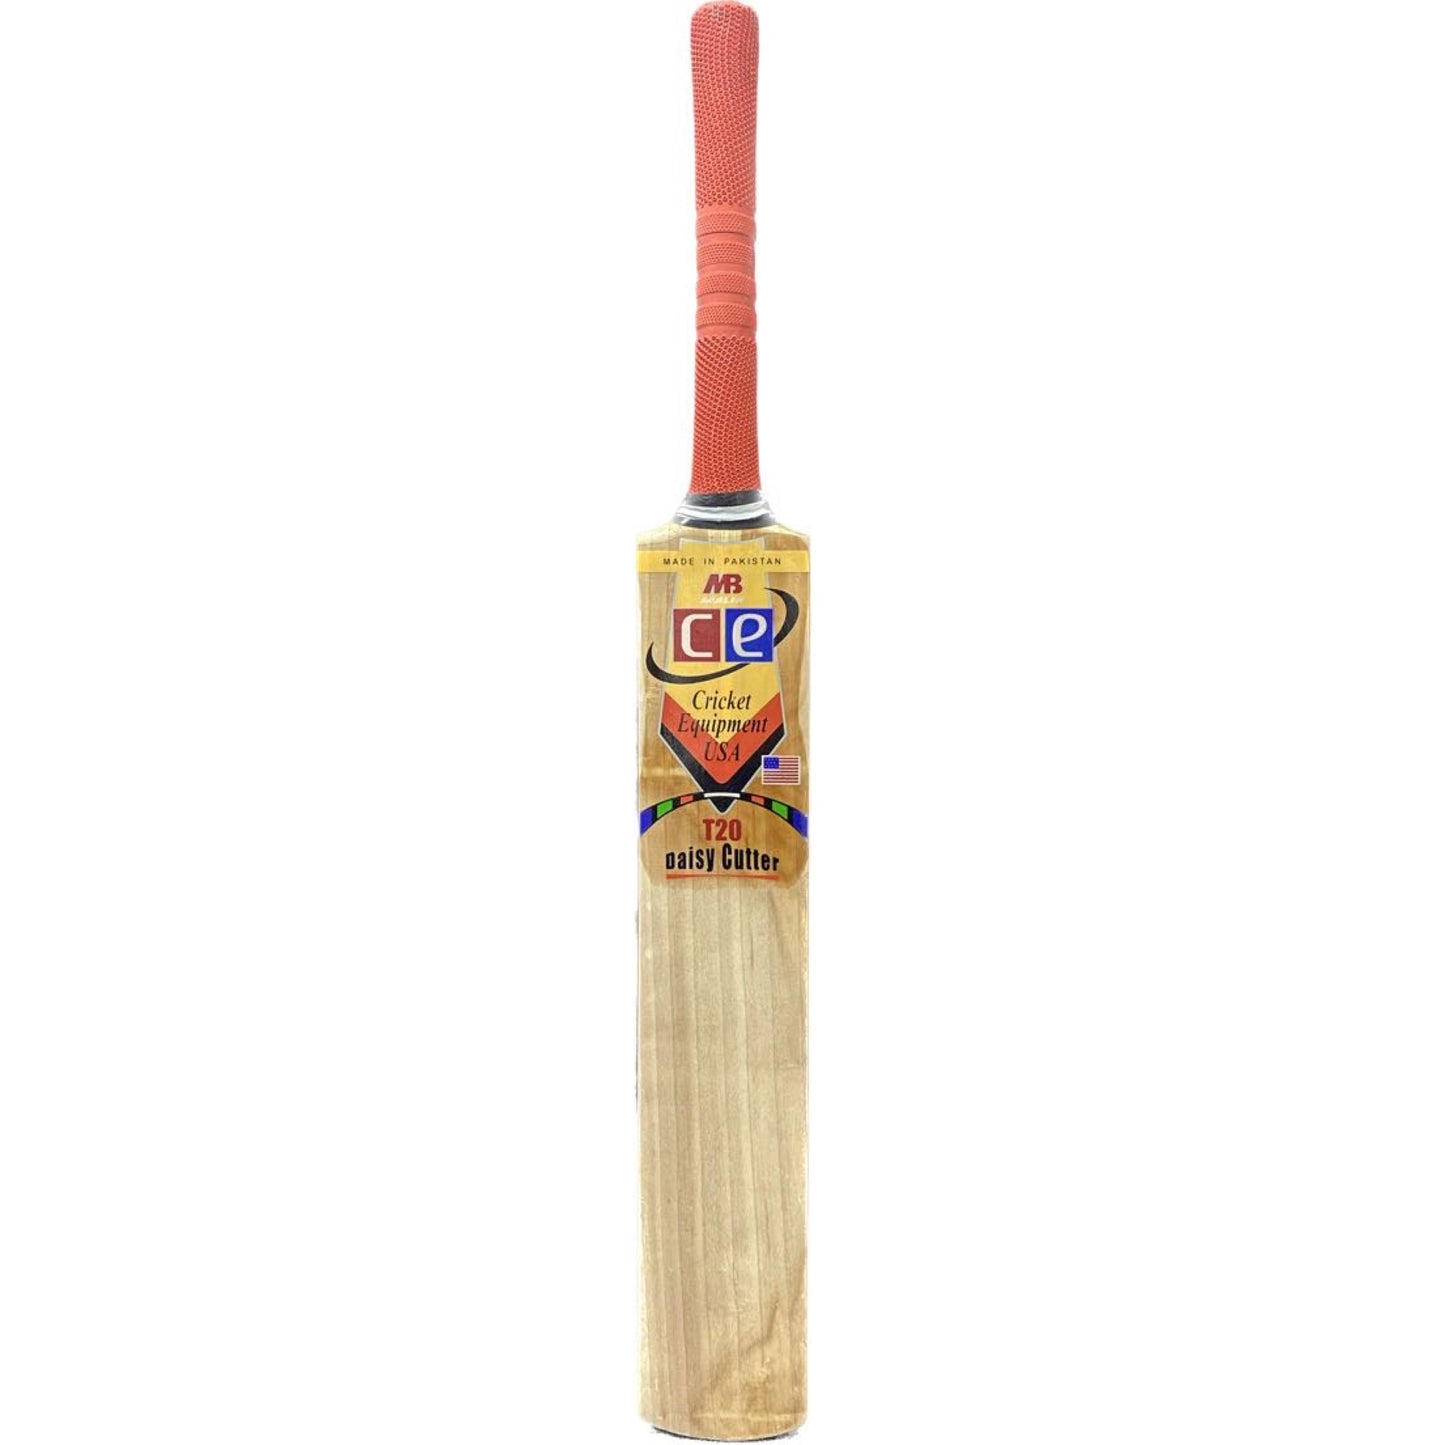 Cricket Bat English Willow T20 Daisy Cutter